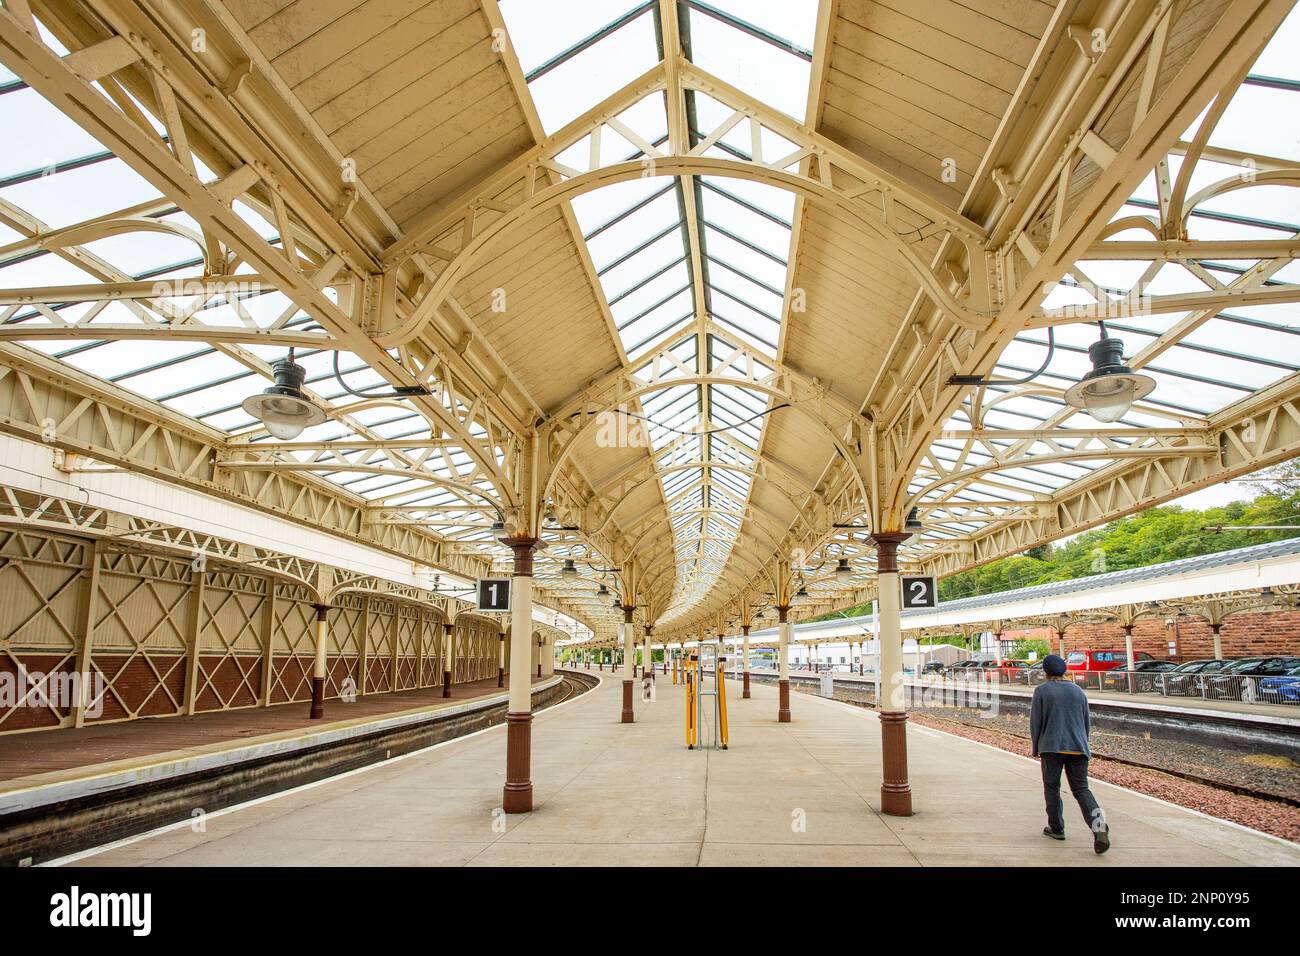 Wemyss Bay Train Station interior, Scotland, United Kingdom Stock Photo